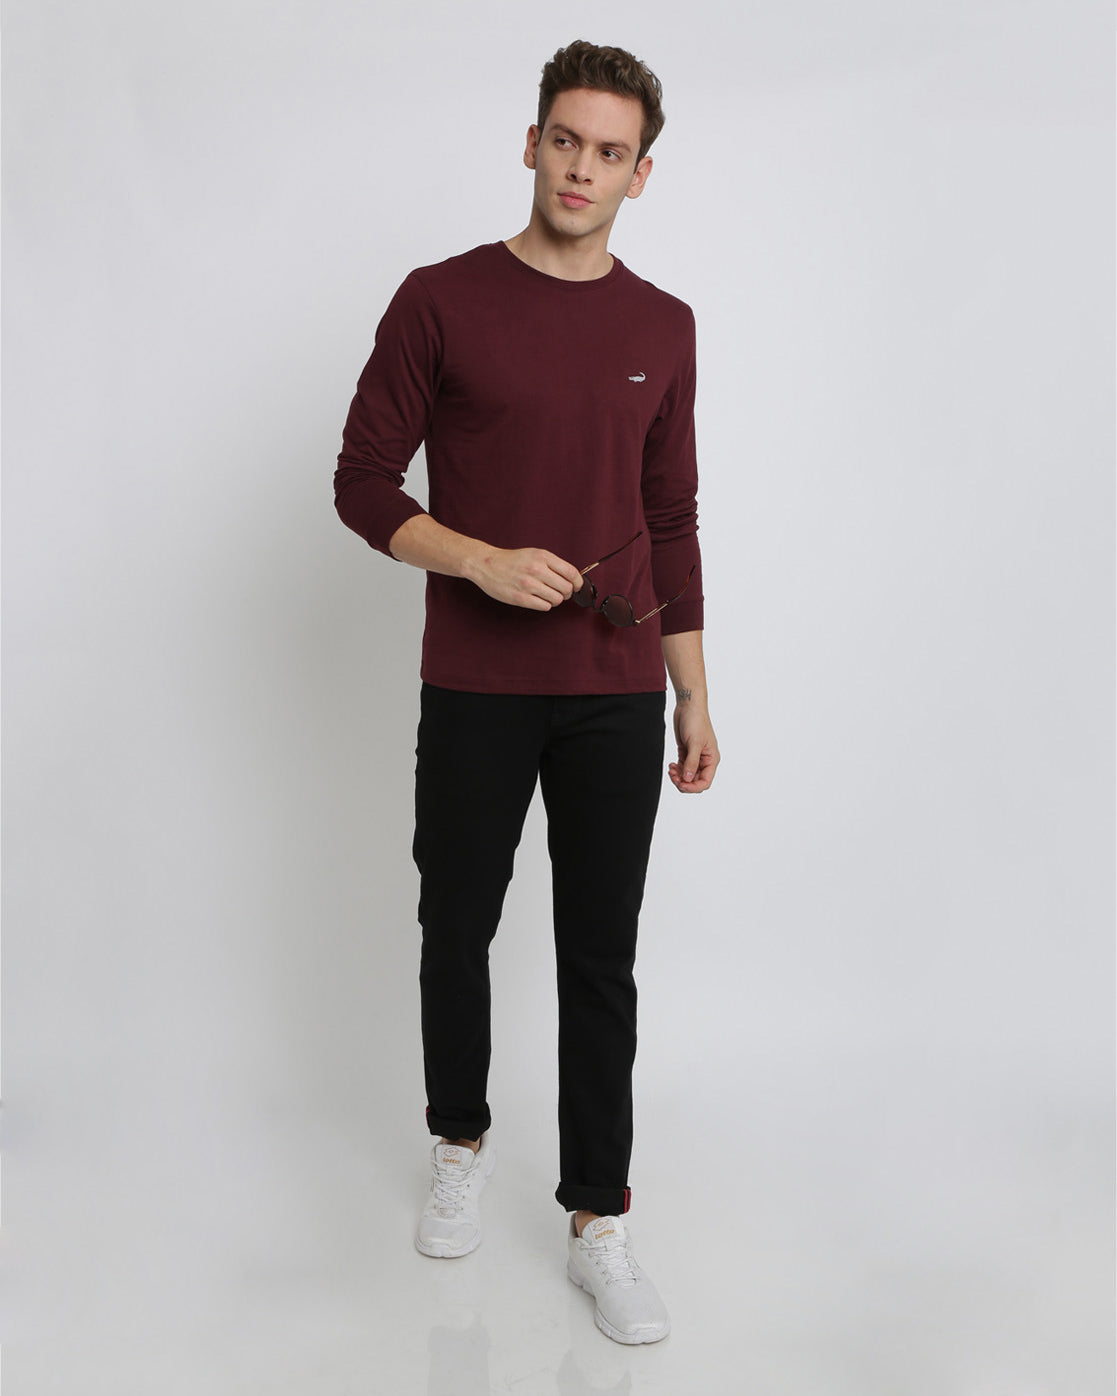 Men's Solid Round Neck Full Sleeve Cotton T-Shirt - WINE